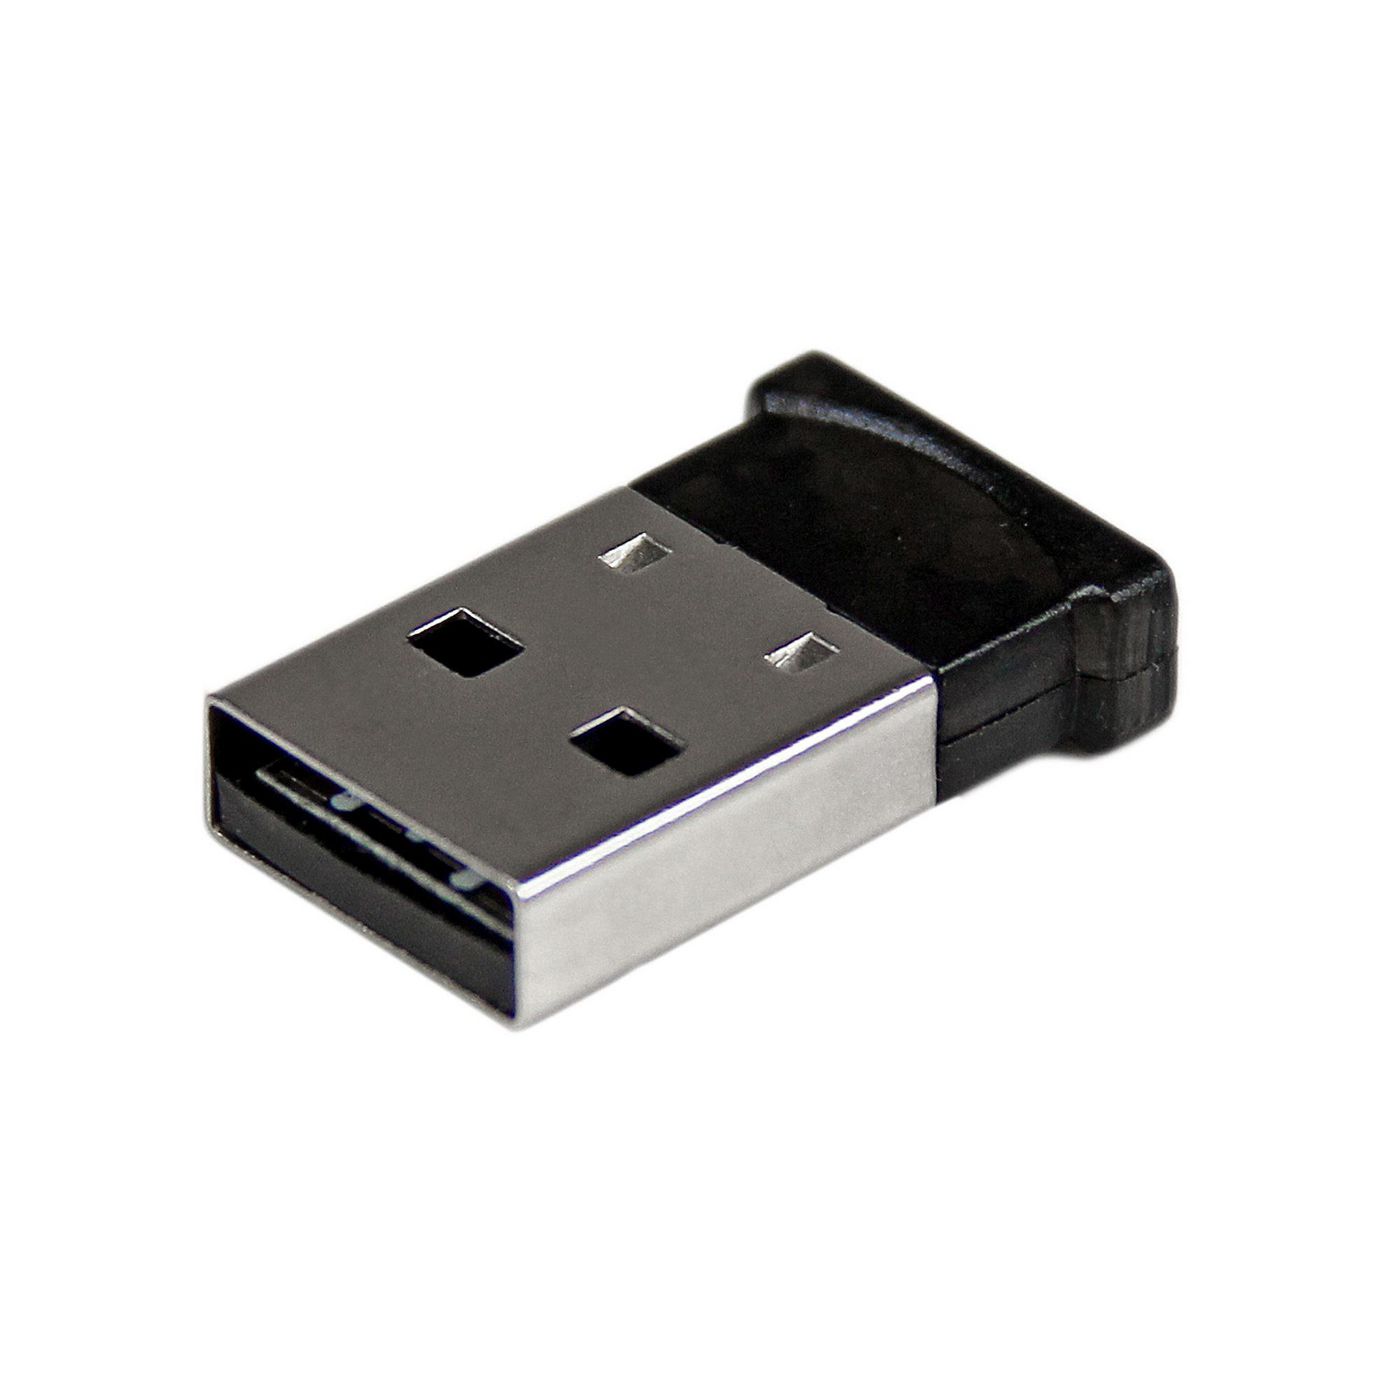 StarTechcom USBBT1EDR4 USB BLUETOOTH 4.0 DONGLE 50M 